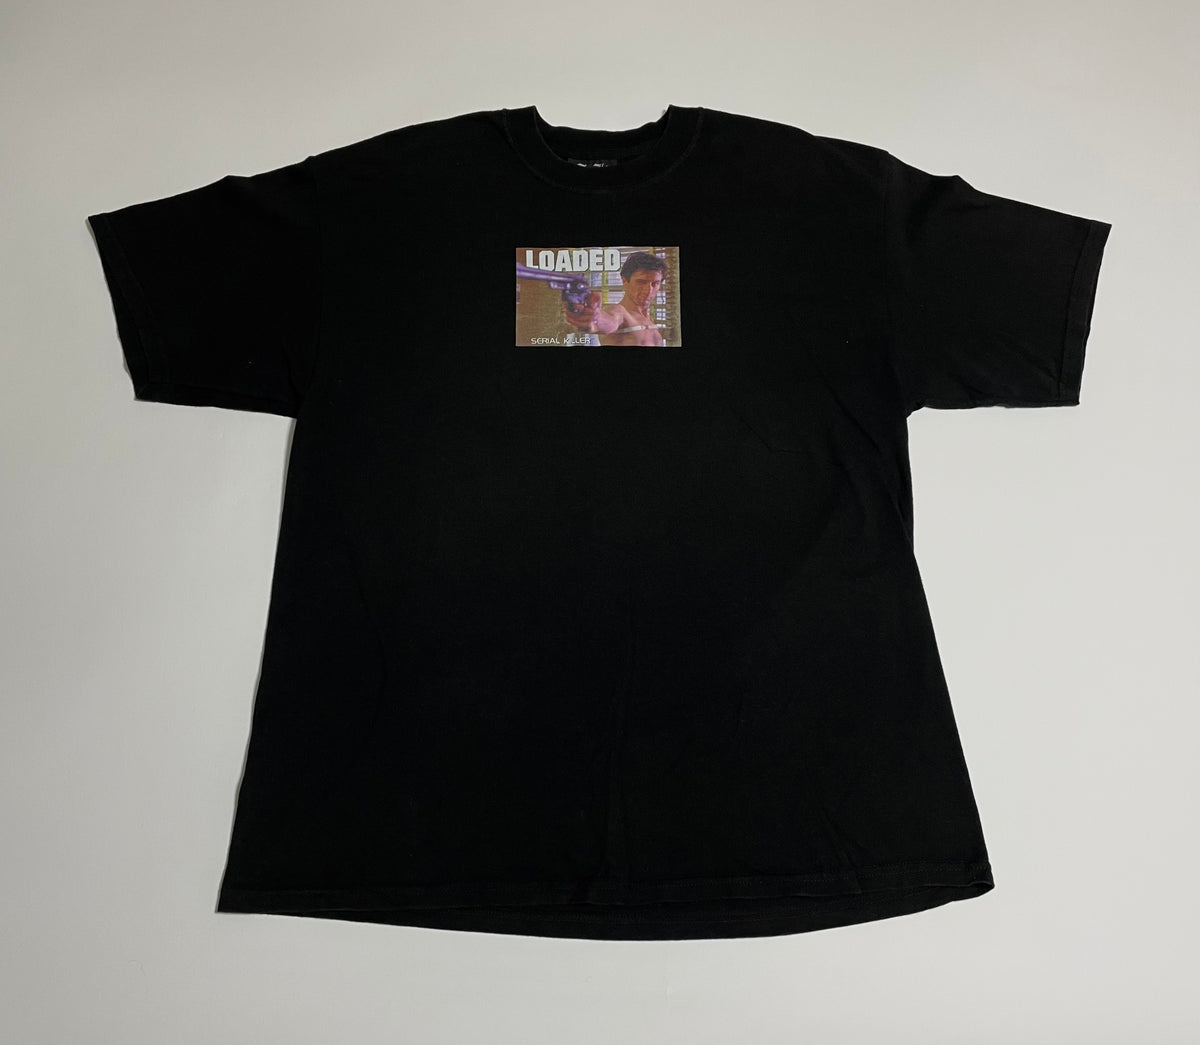 90s serial killer “Taxi driver” vintage t shirt XL – NO BURCANCY